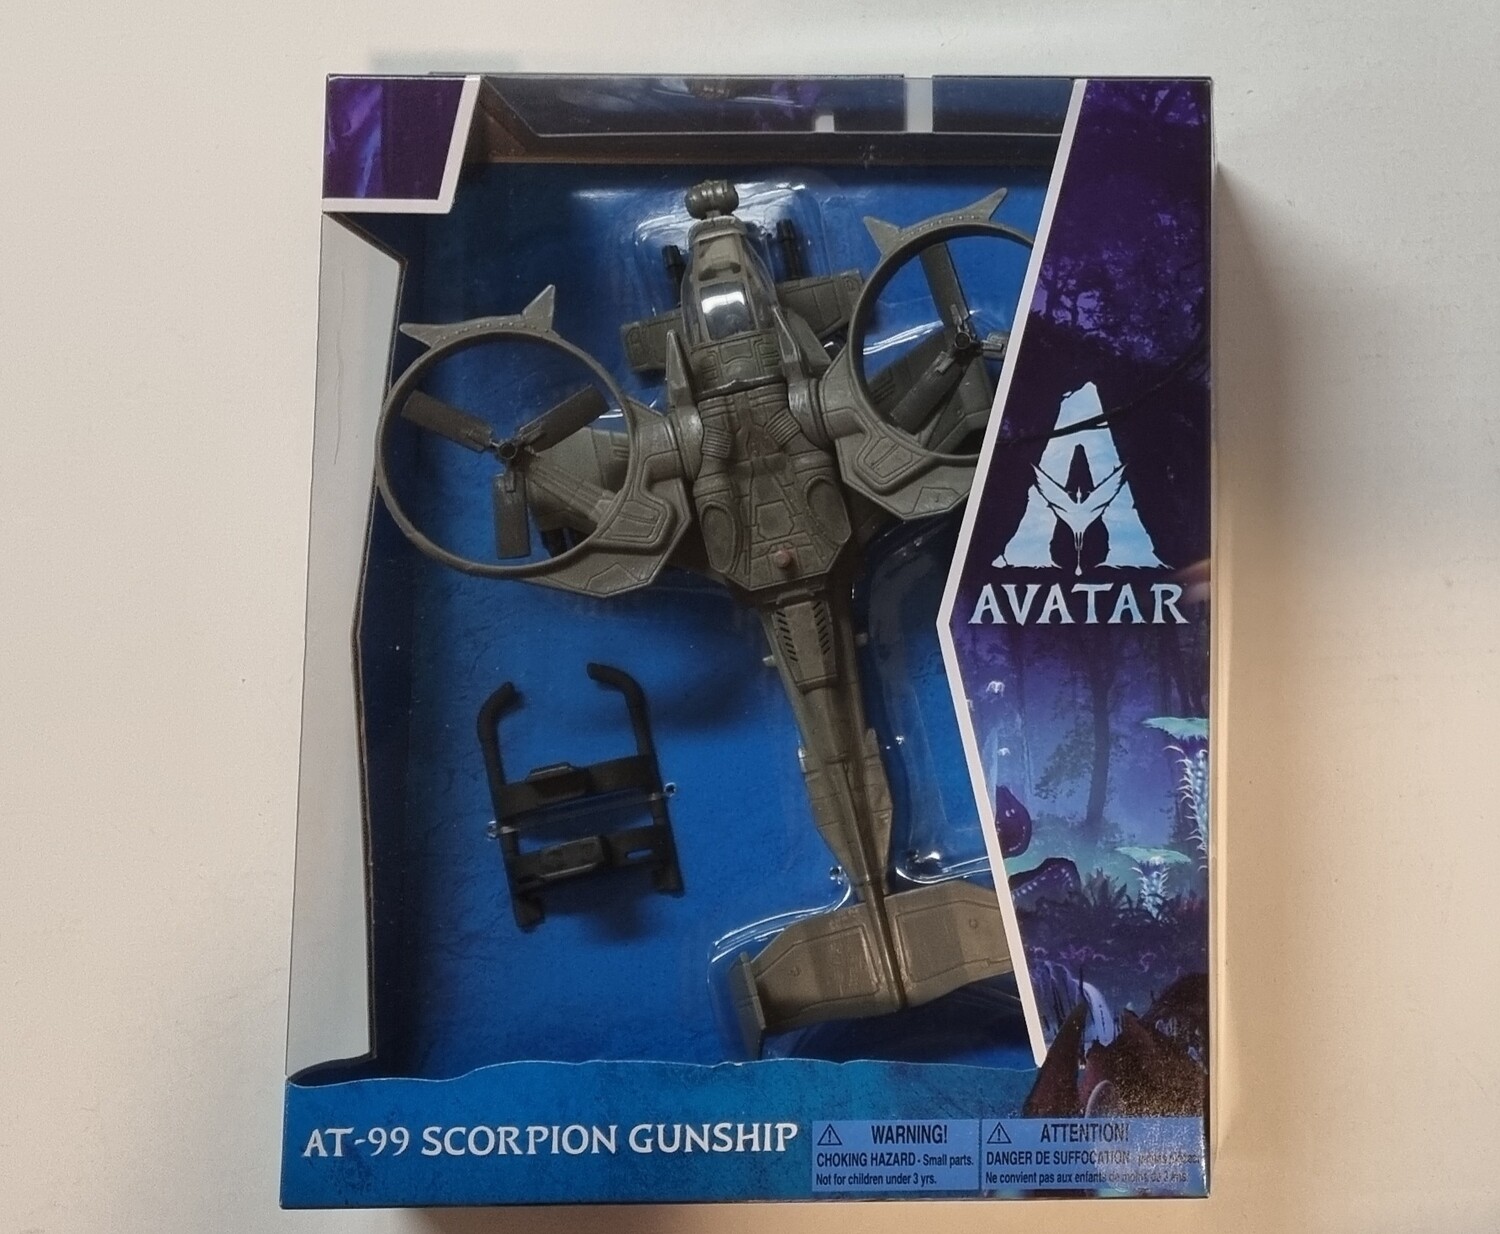 AT-99 Scorpion Gunship, Deluxe Large Vehicle with Figure, Avatar World of Pandora